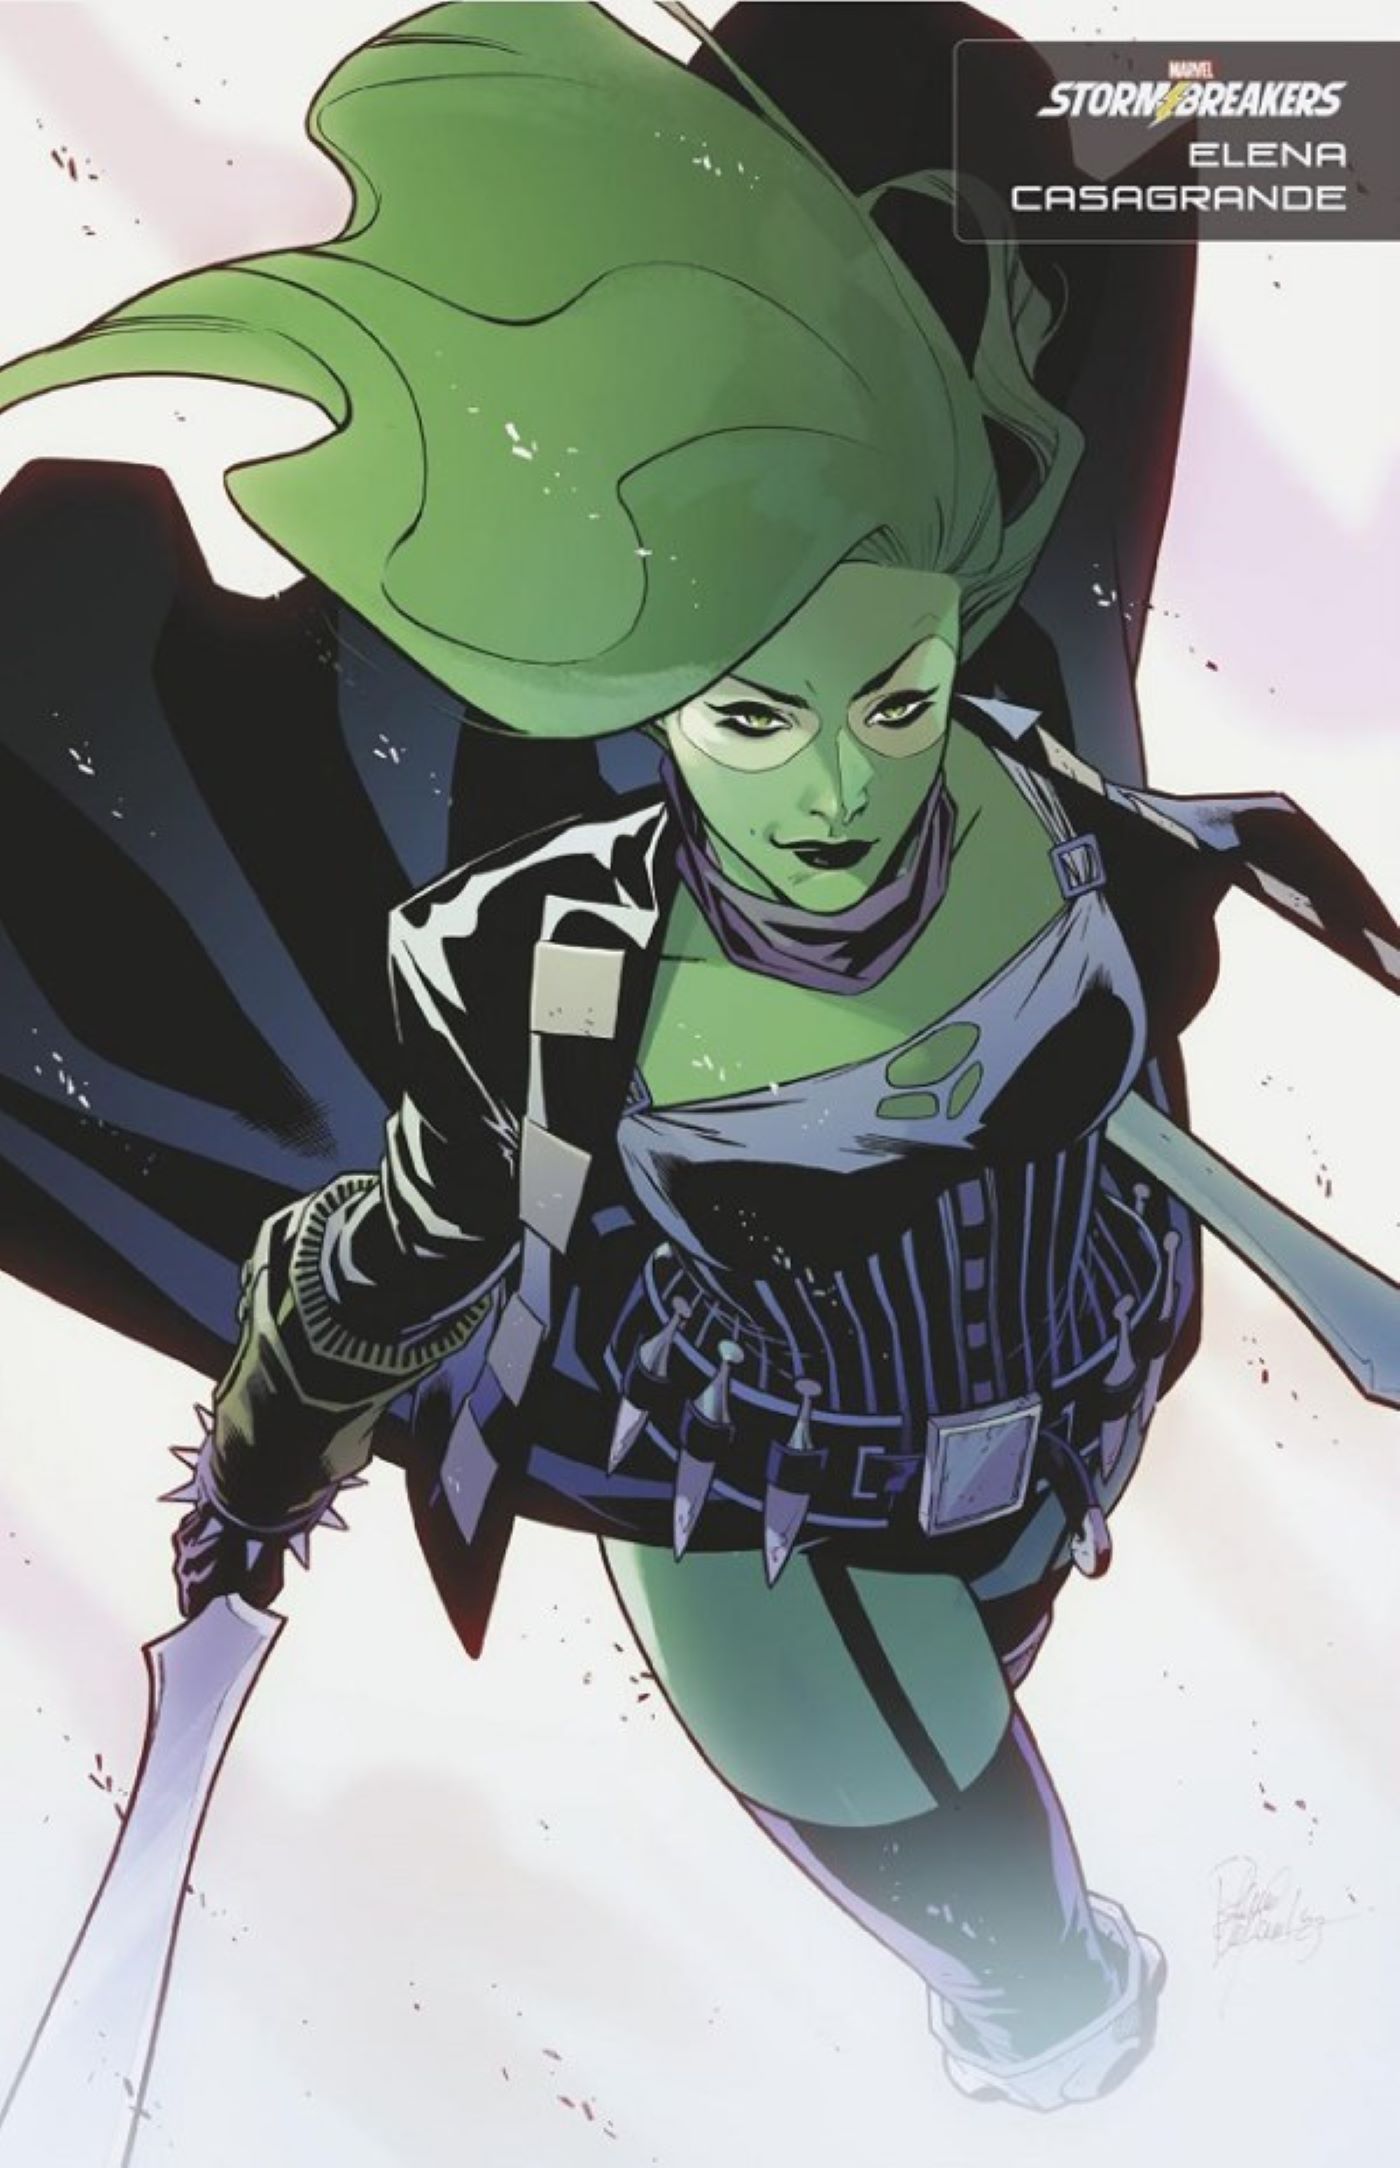 Doctor Strange #13 Stormbreaker variant cover featuring Gamora